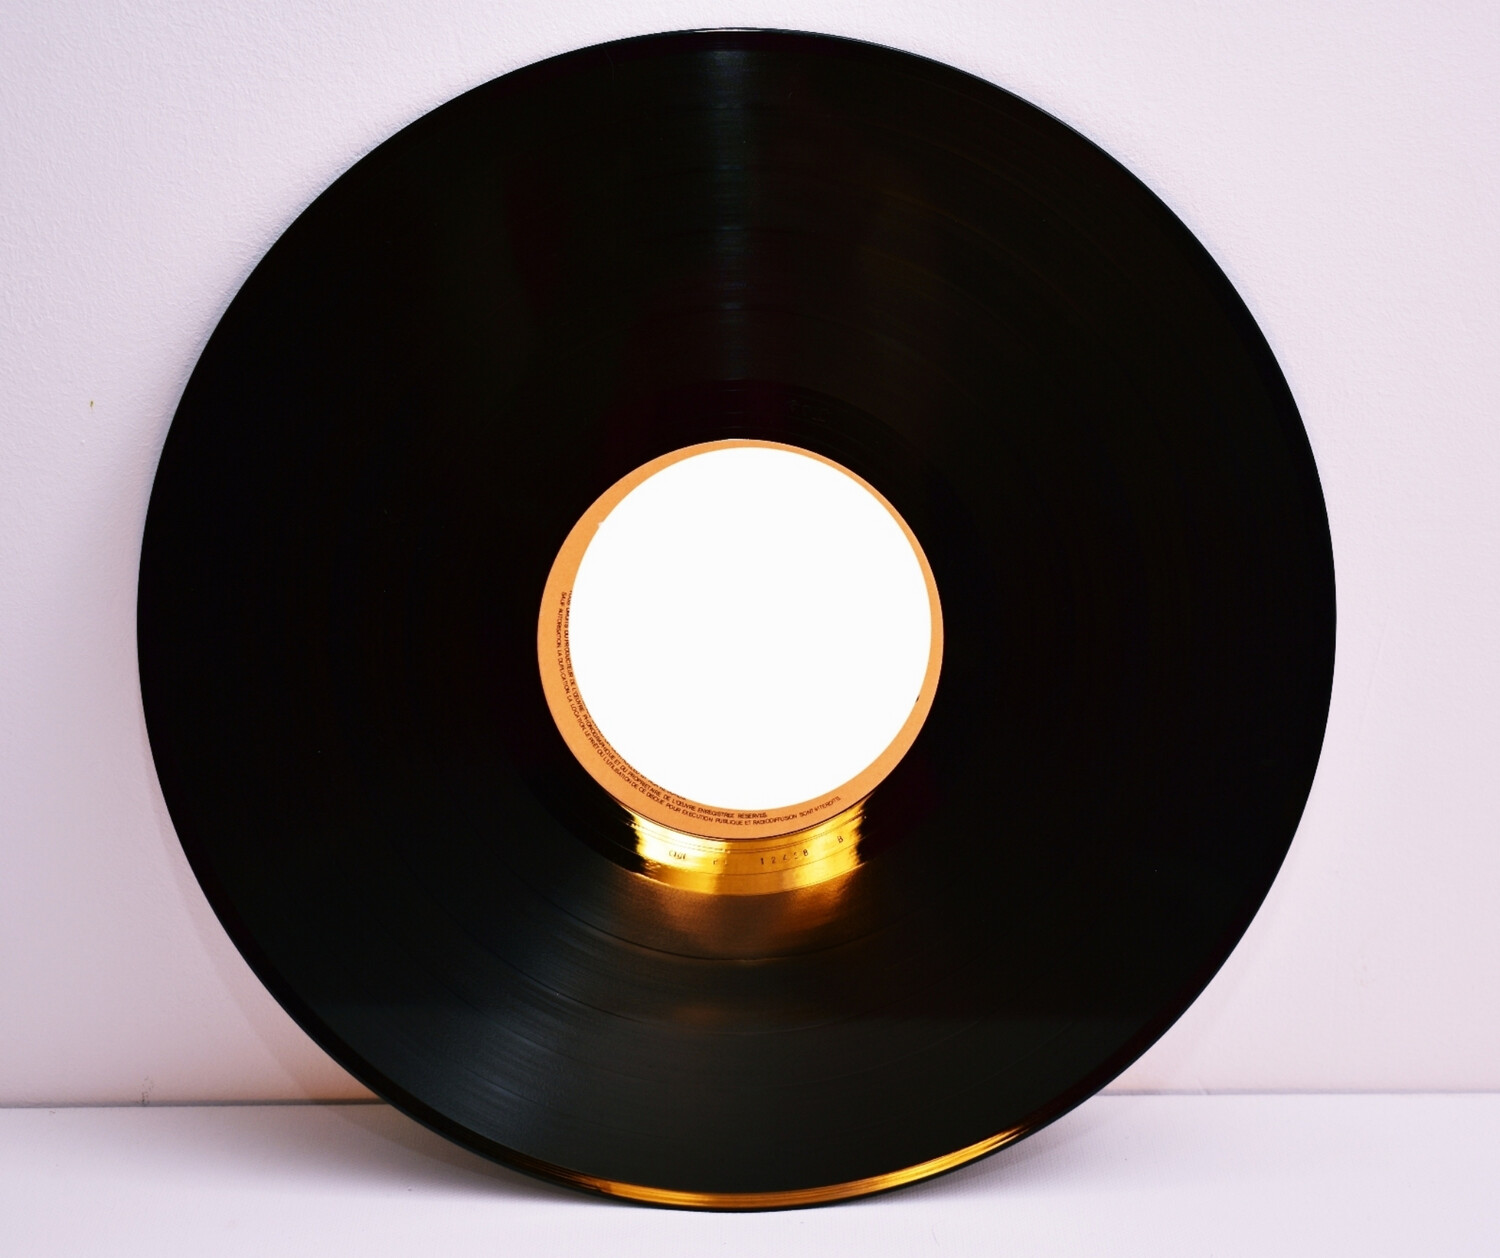 Guy Lombardo “Deck The Halls“, Record